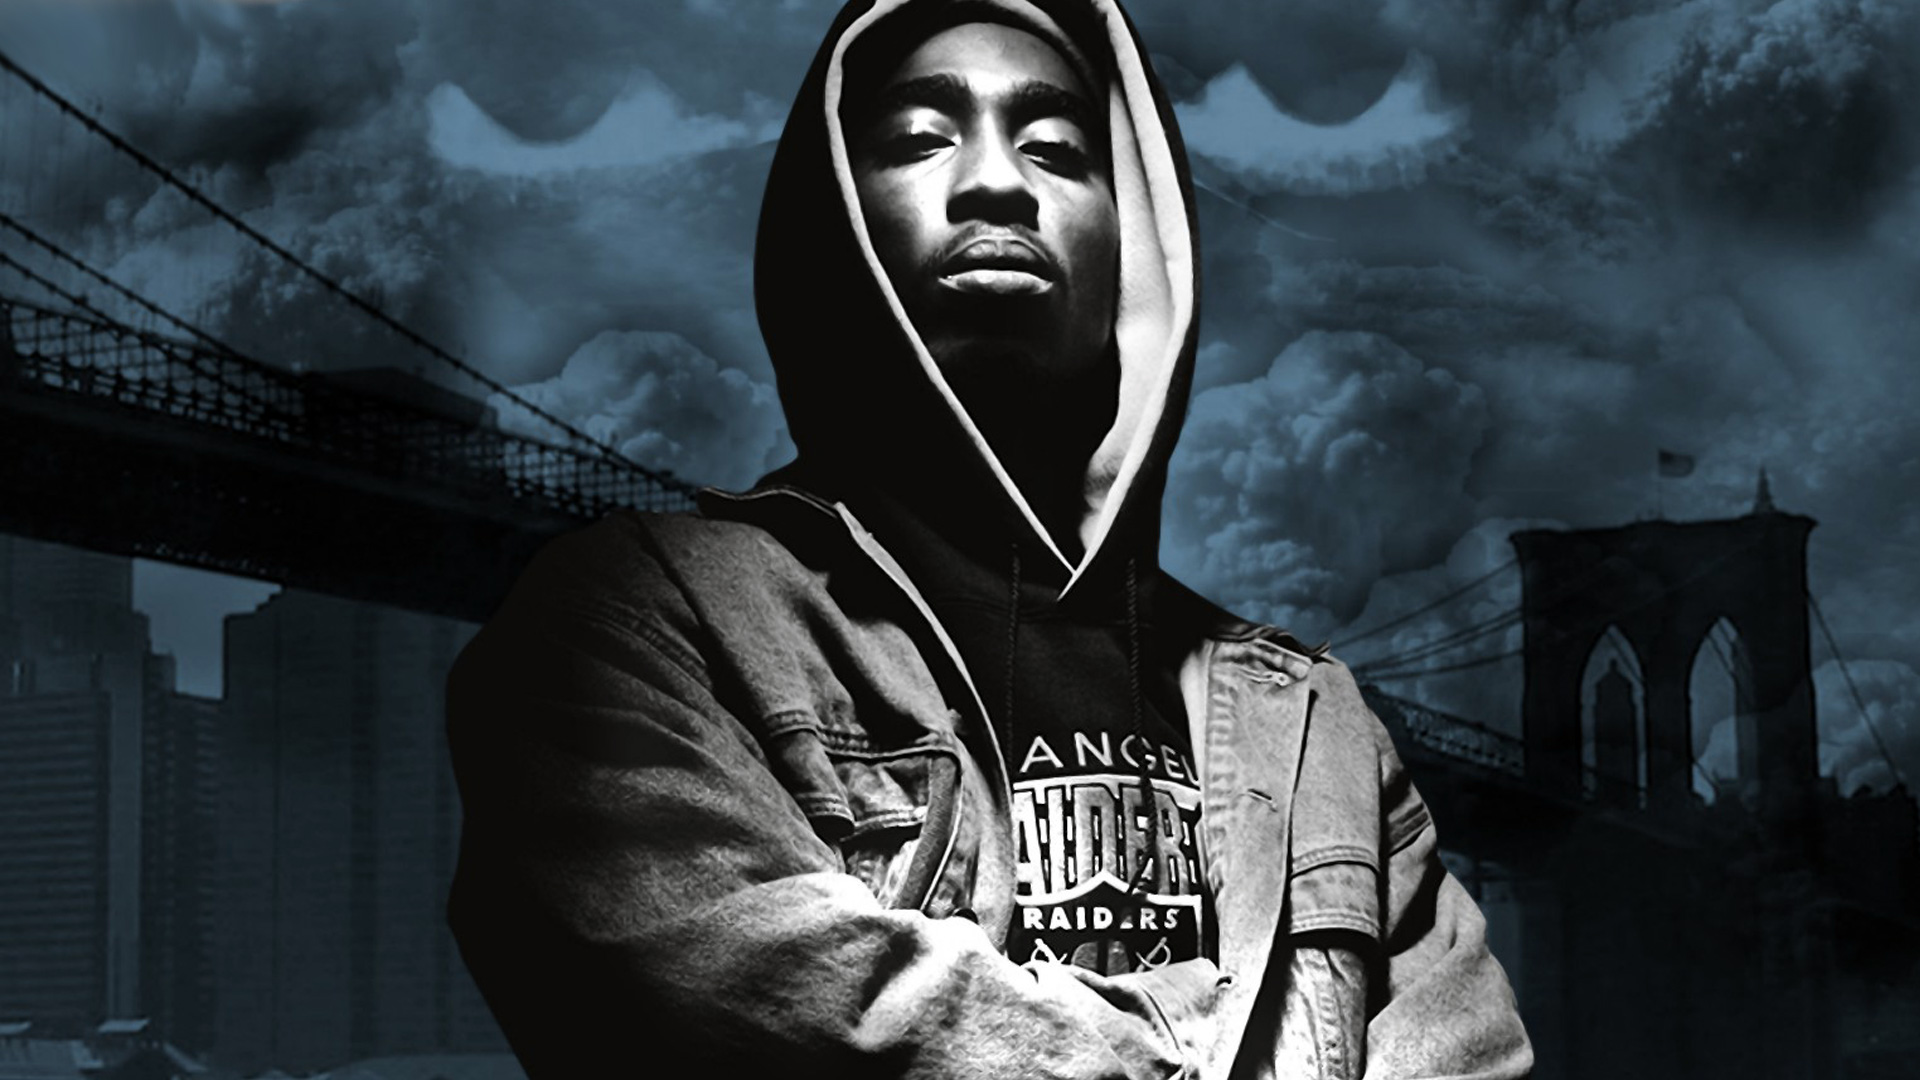 Tupac Shakur Wallpaper Pictures Image